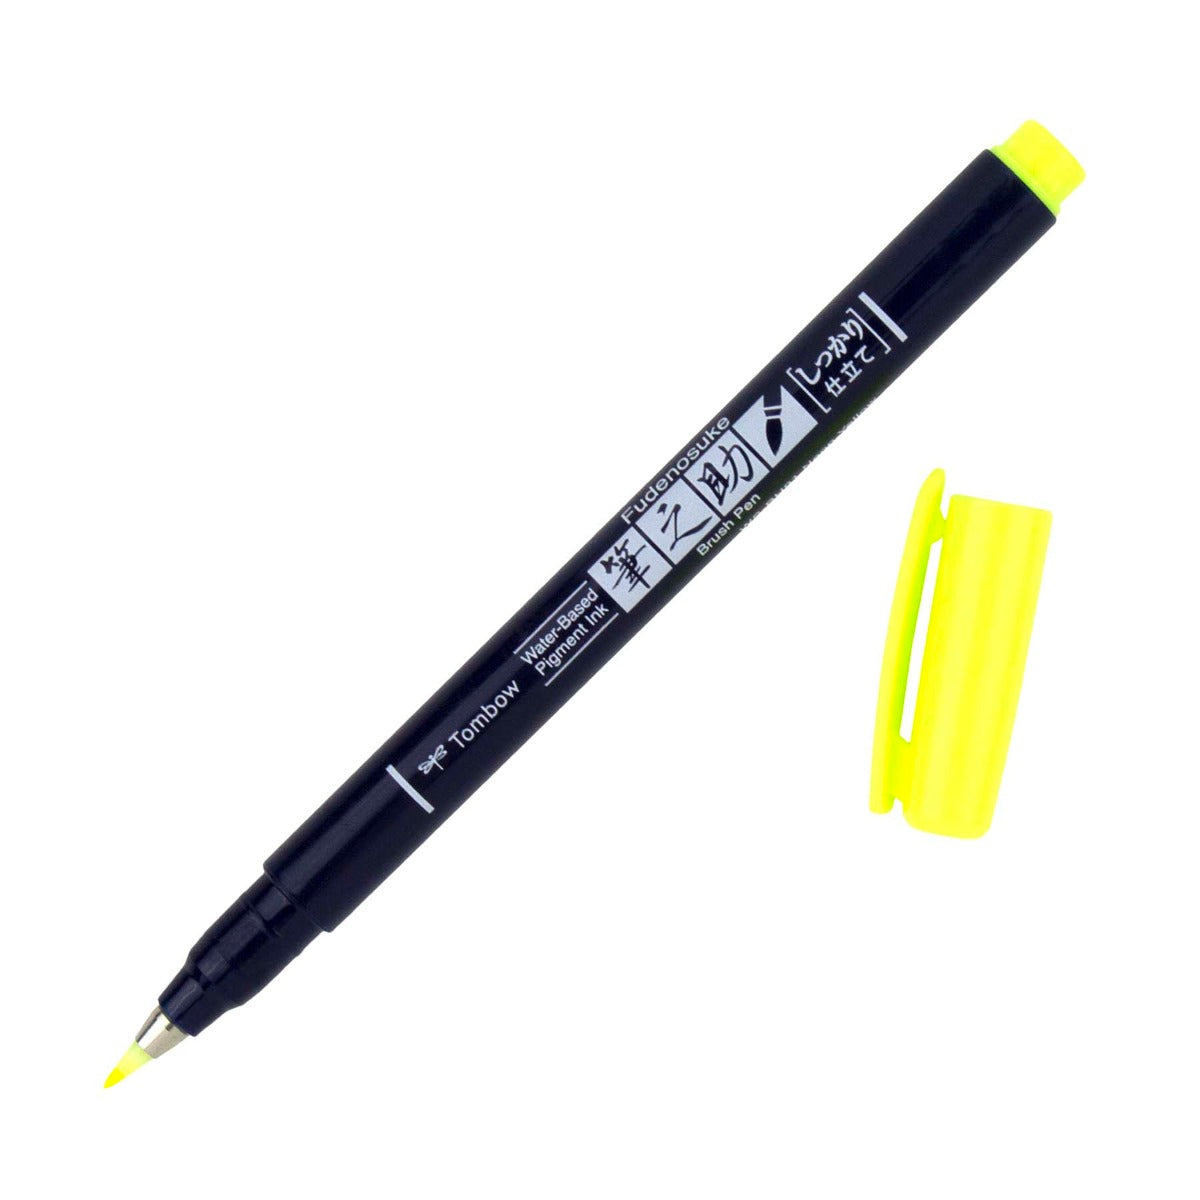 Tombow Fudenosuke Pens - Individual Pens